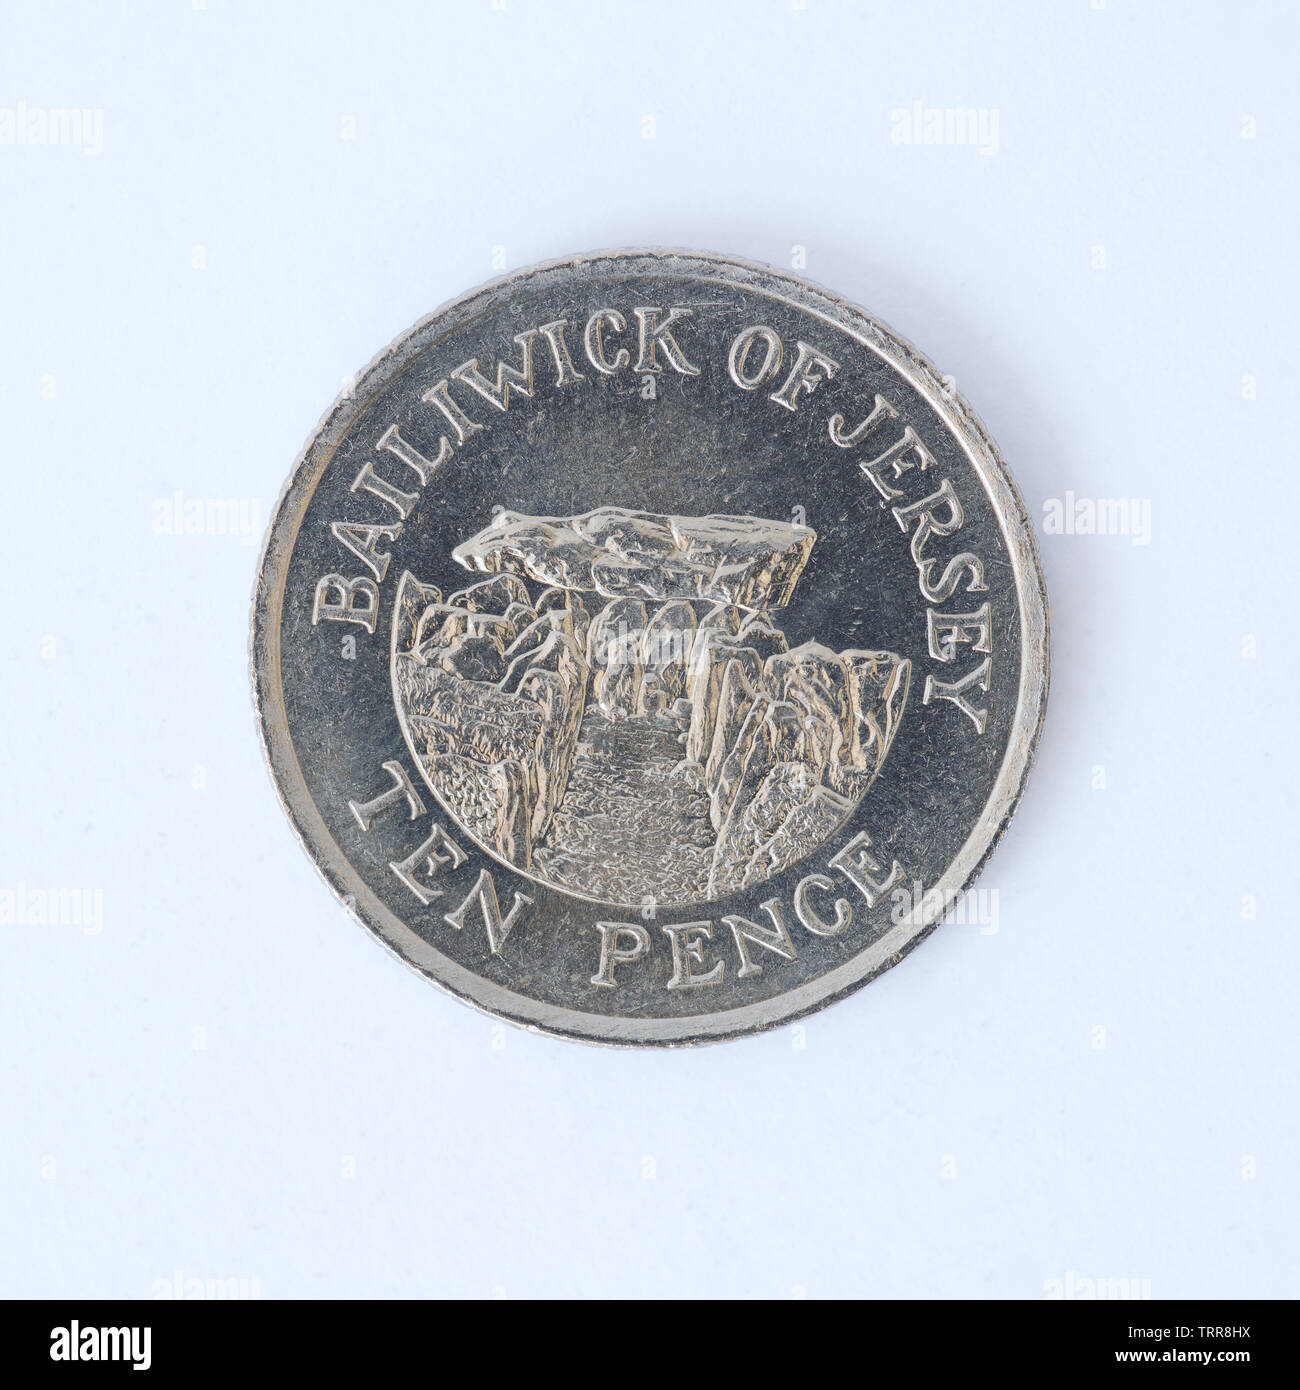 Jersey 10 Pence - Elizabeth II Coin - 1992 Stock Photo - Alamy